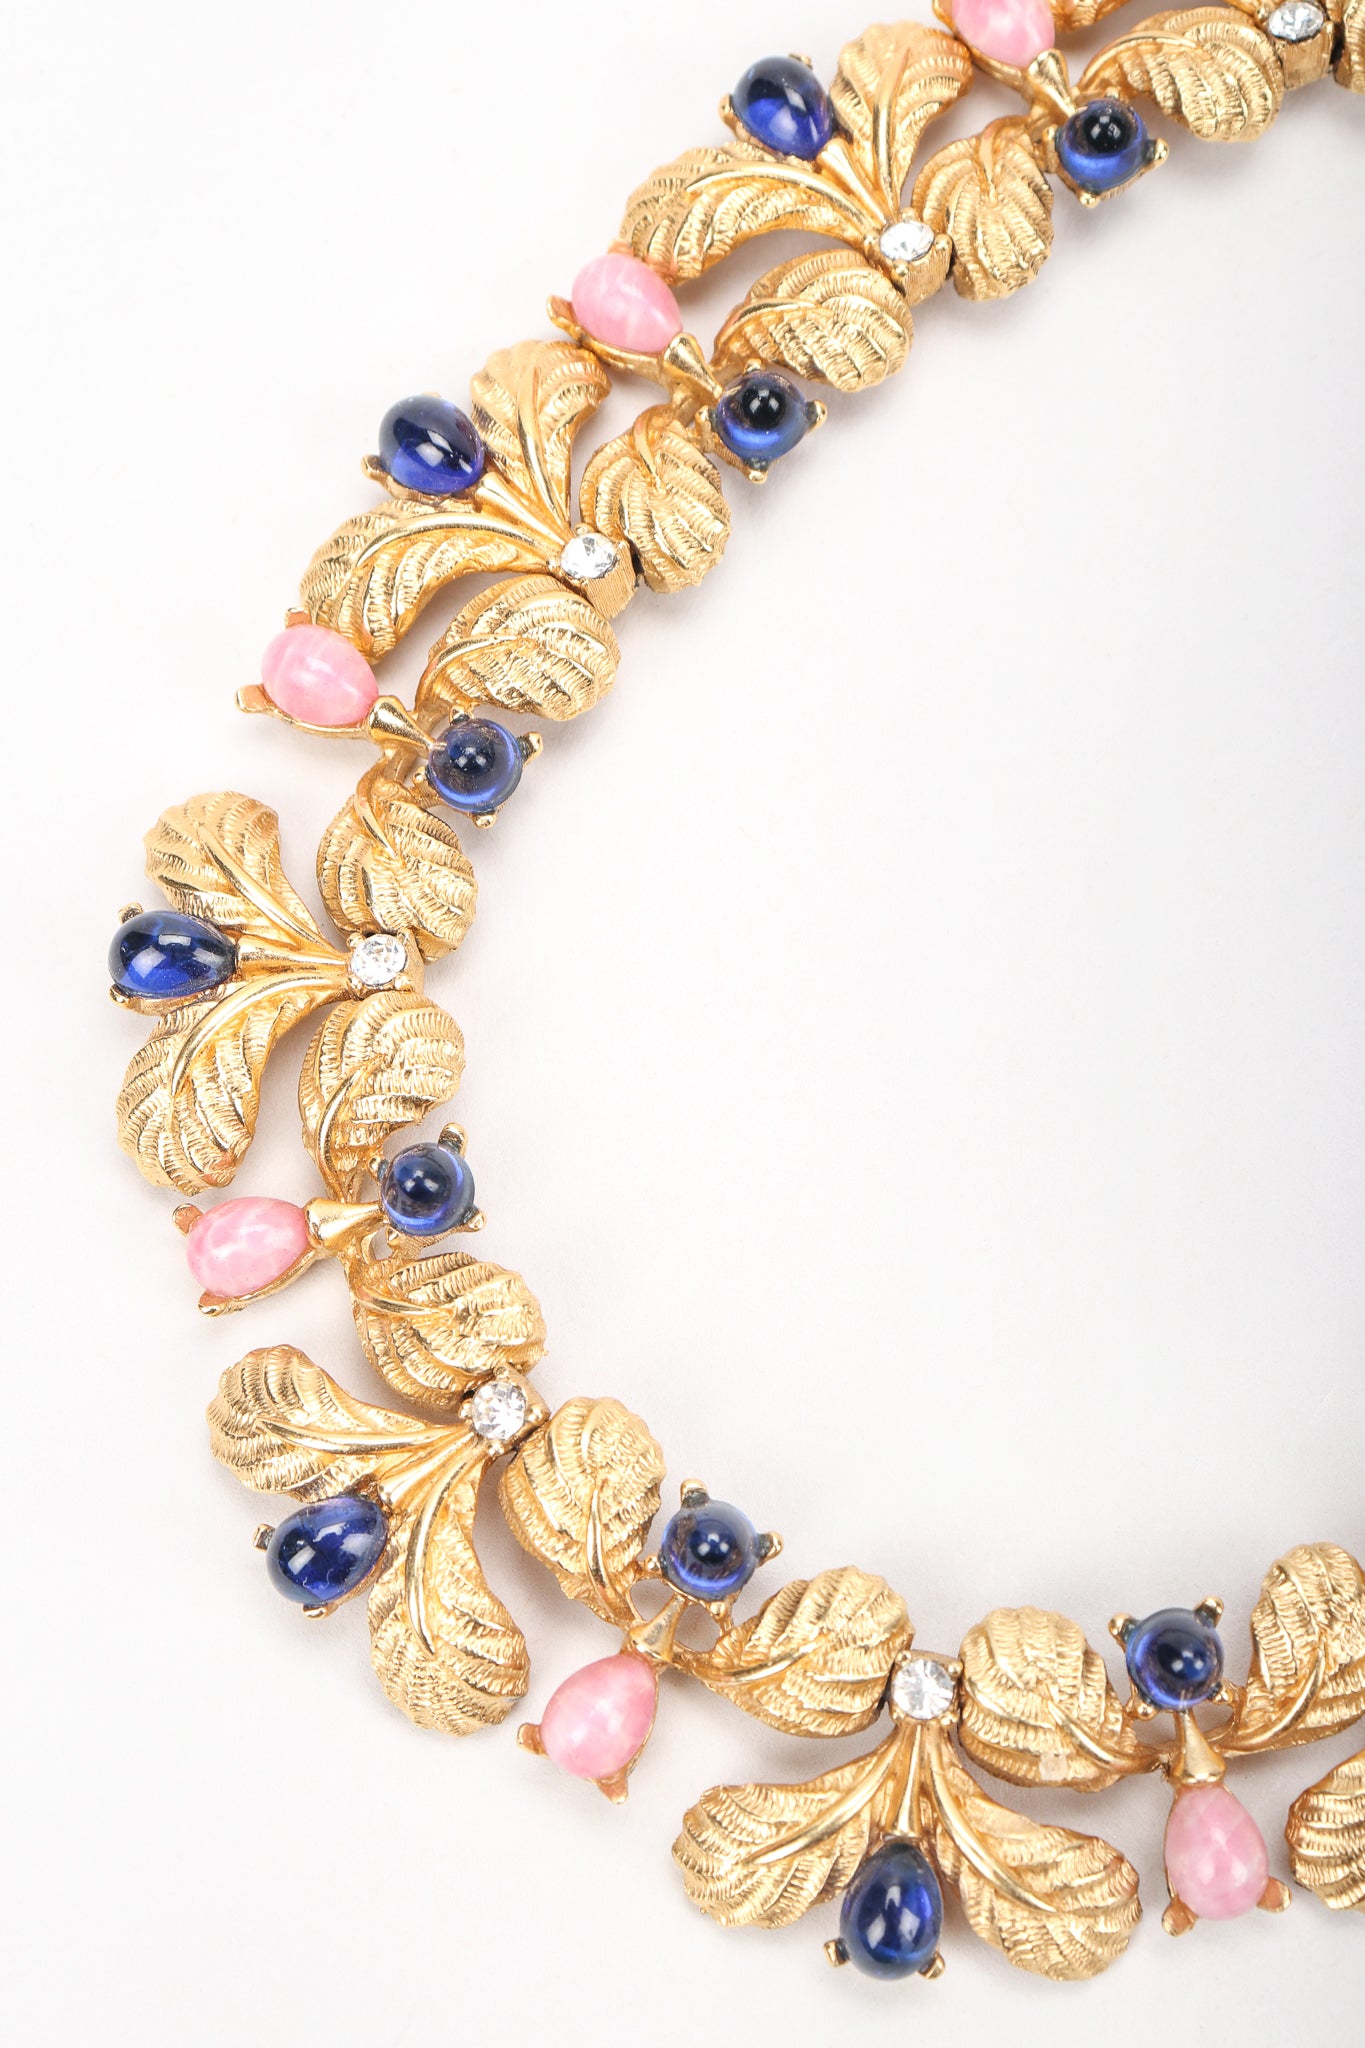 Louis Vuitton Necklace on Jasper Beads - Laurel Ridge Antiques and Inn